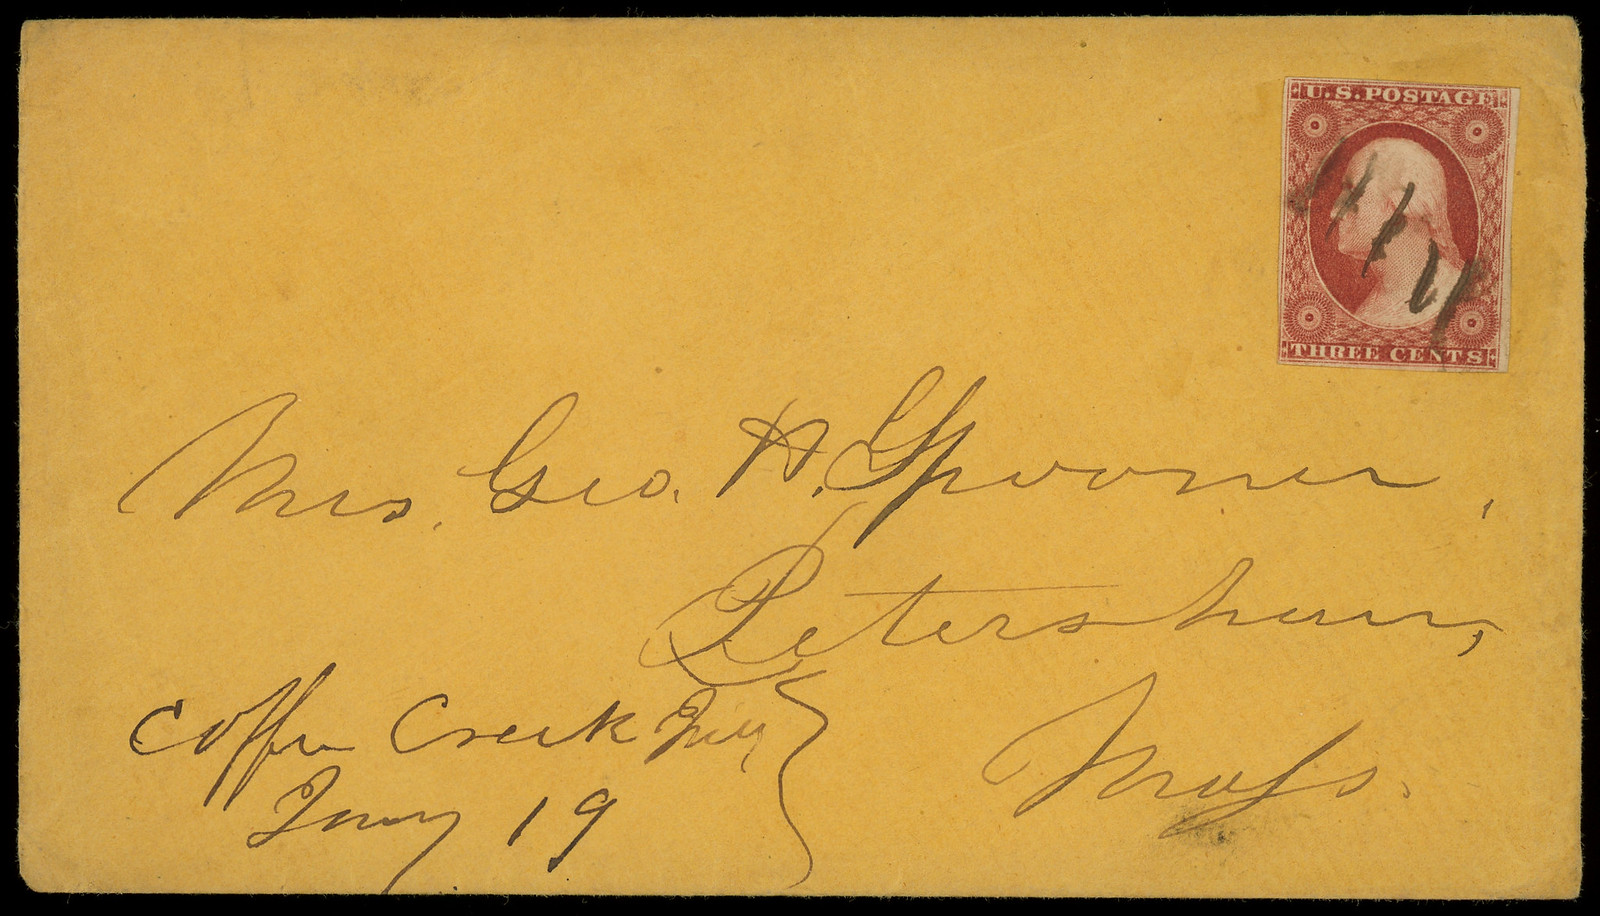 Coffee Creek, Indiana, January 19, 1856[?] - Postal Cover